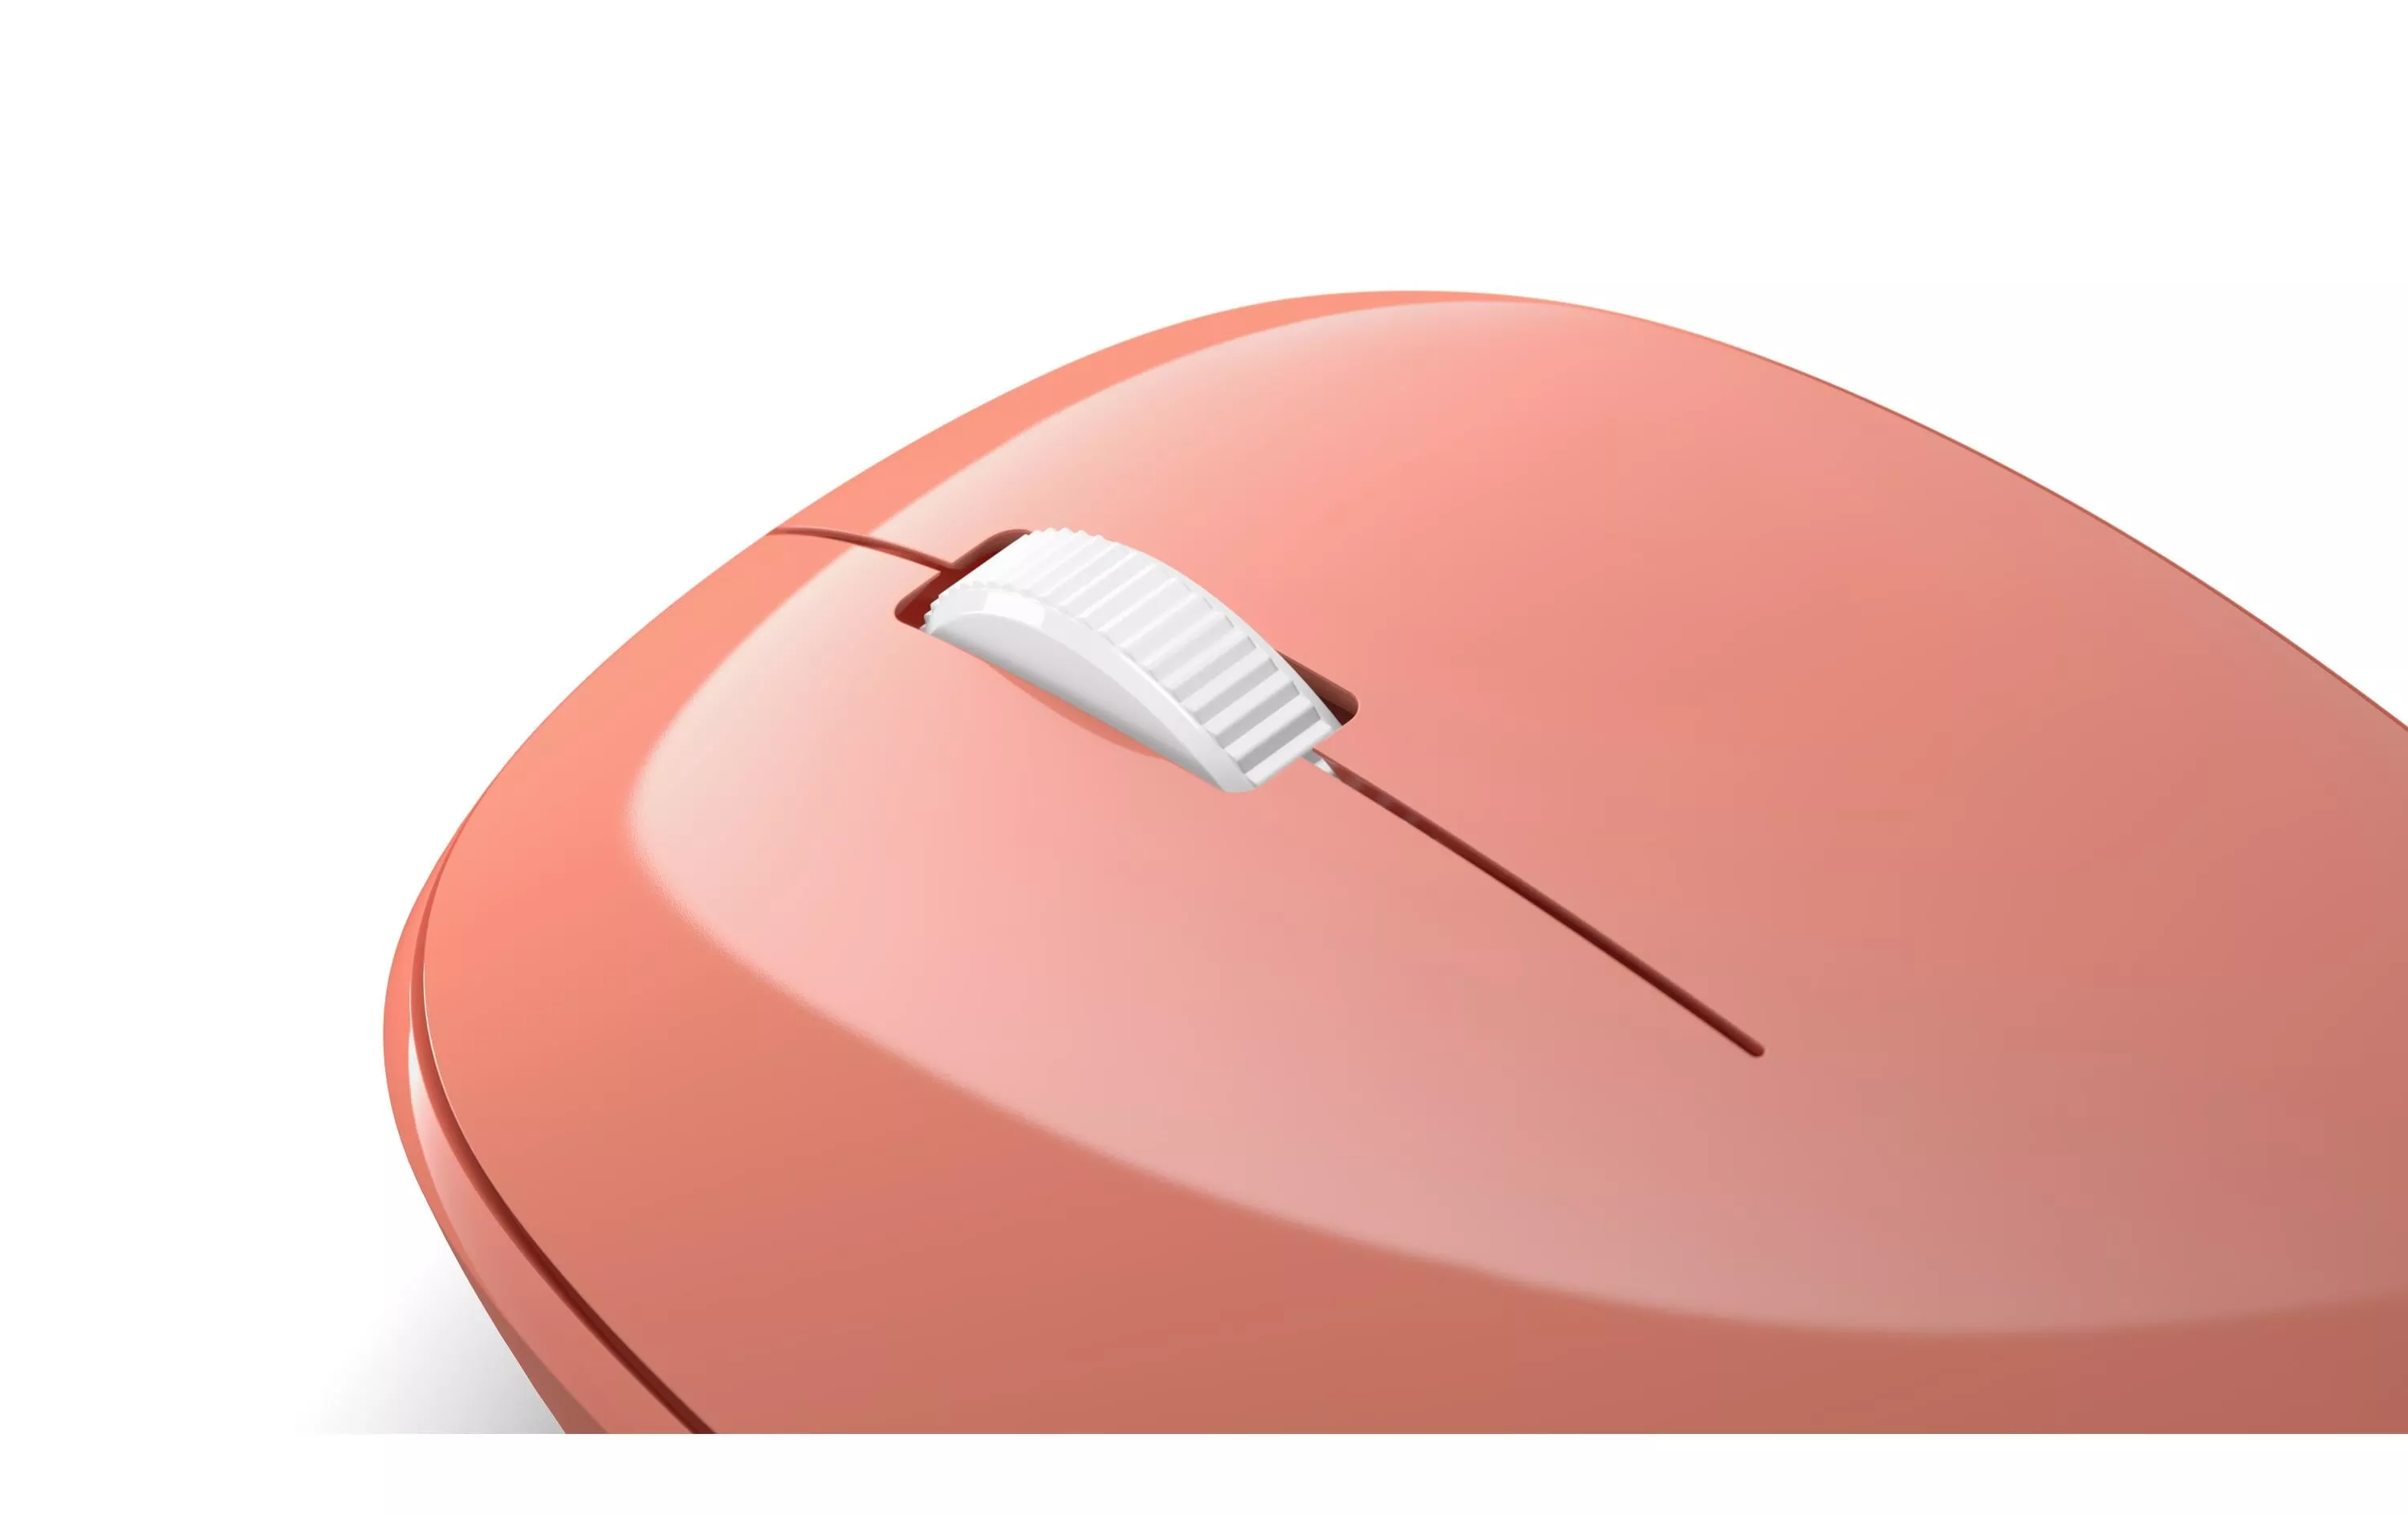 Bluetooth Mouse Peach